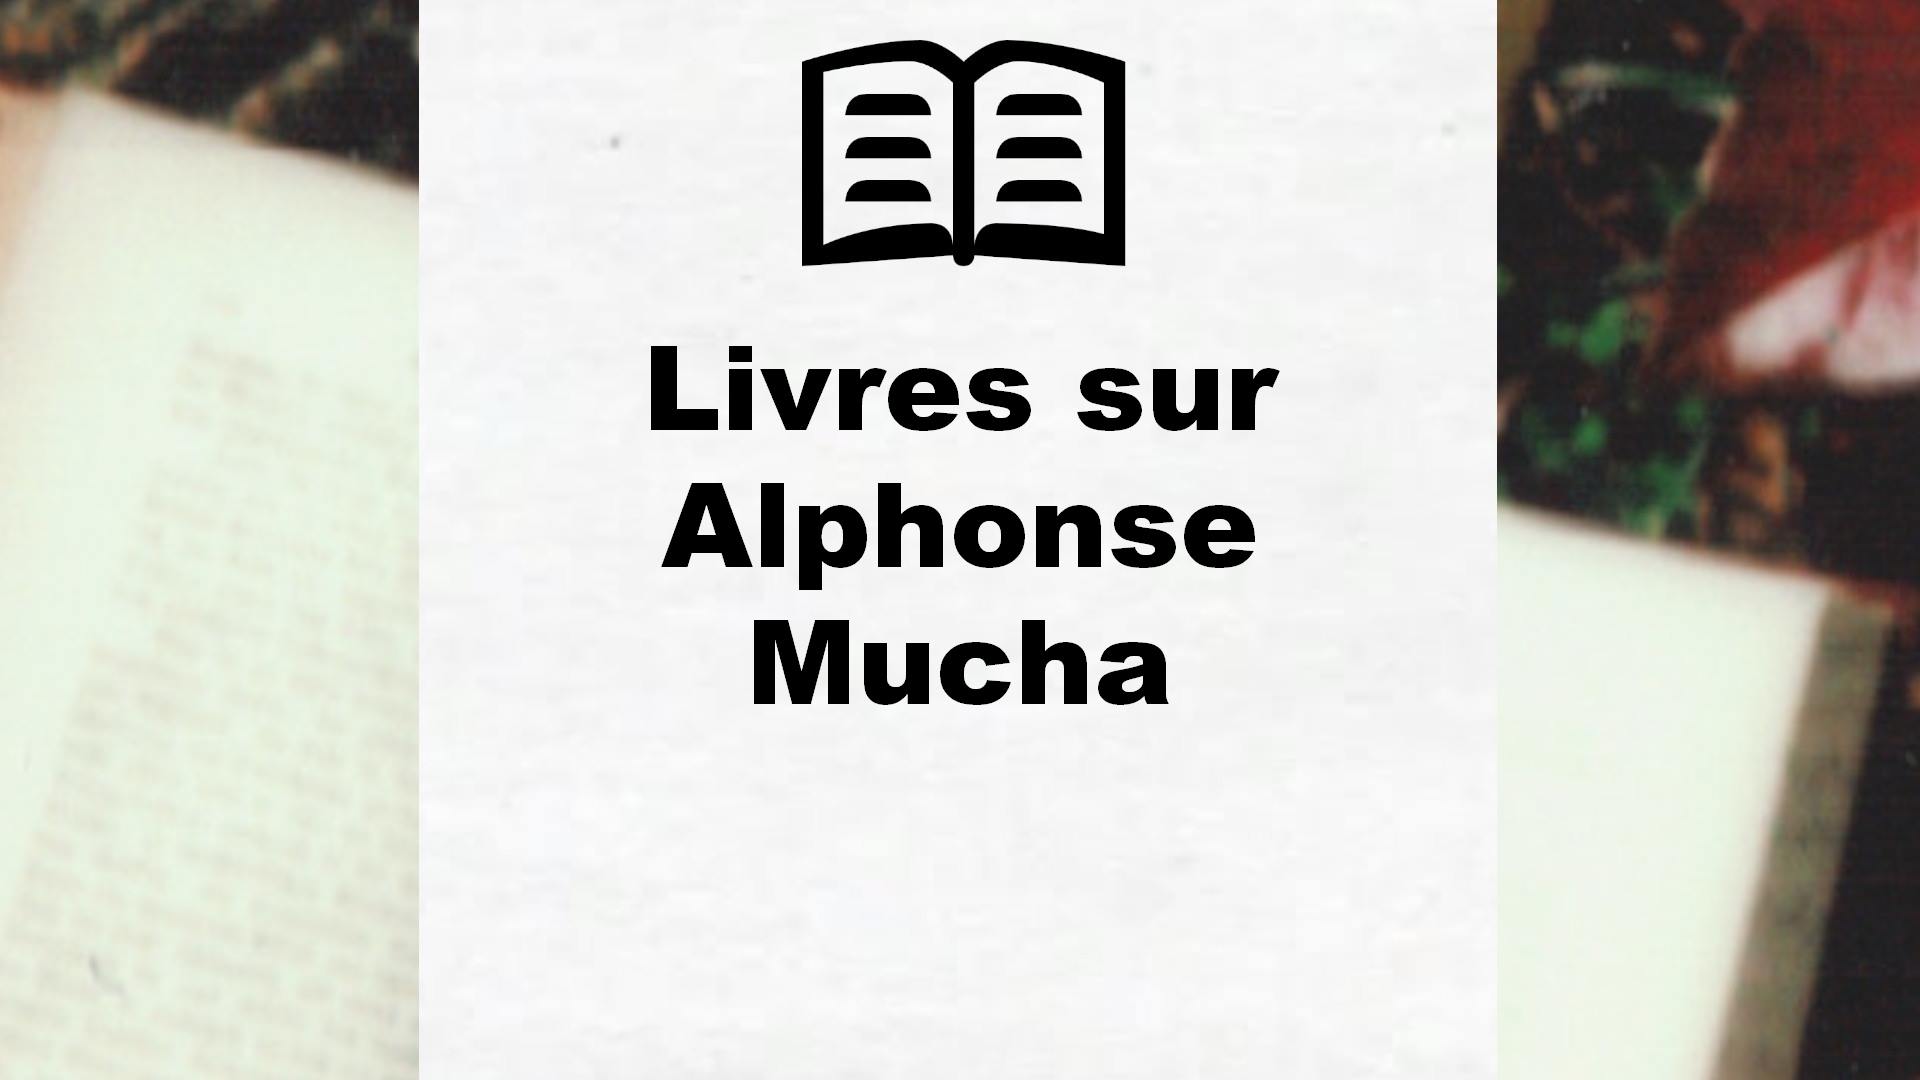 Livres sur Alphonse Mucha